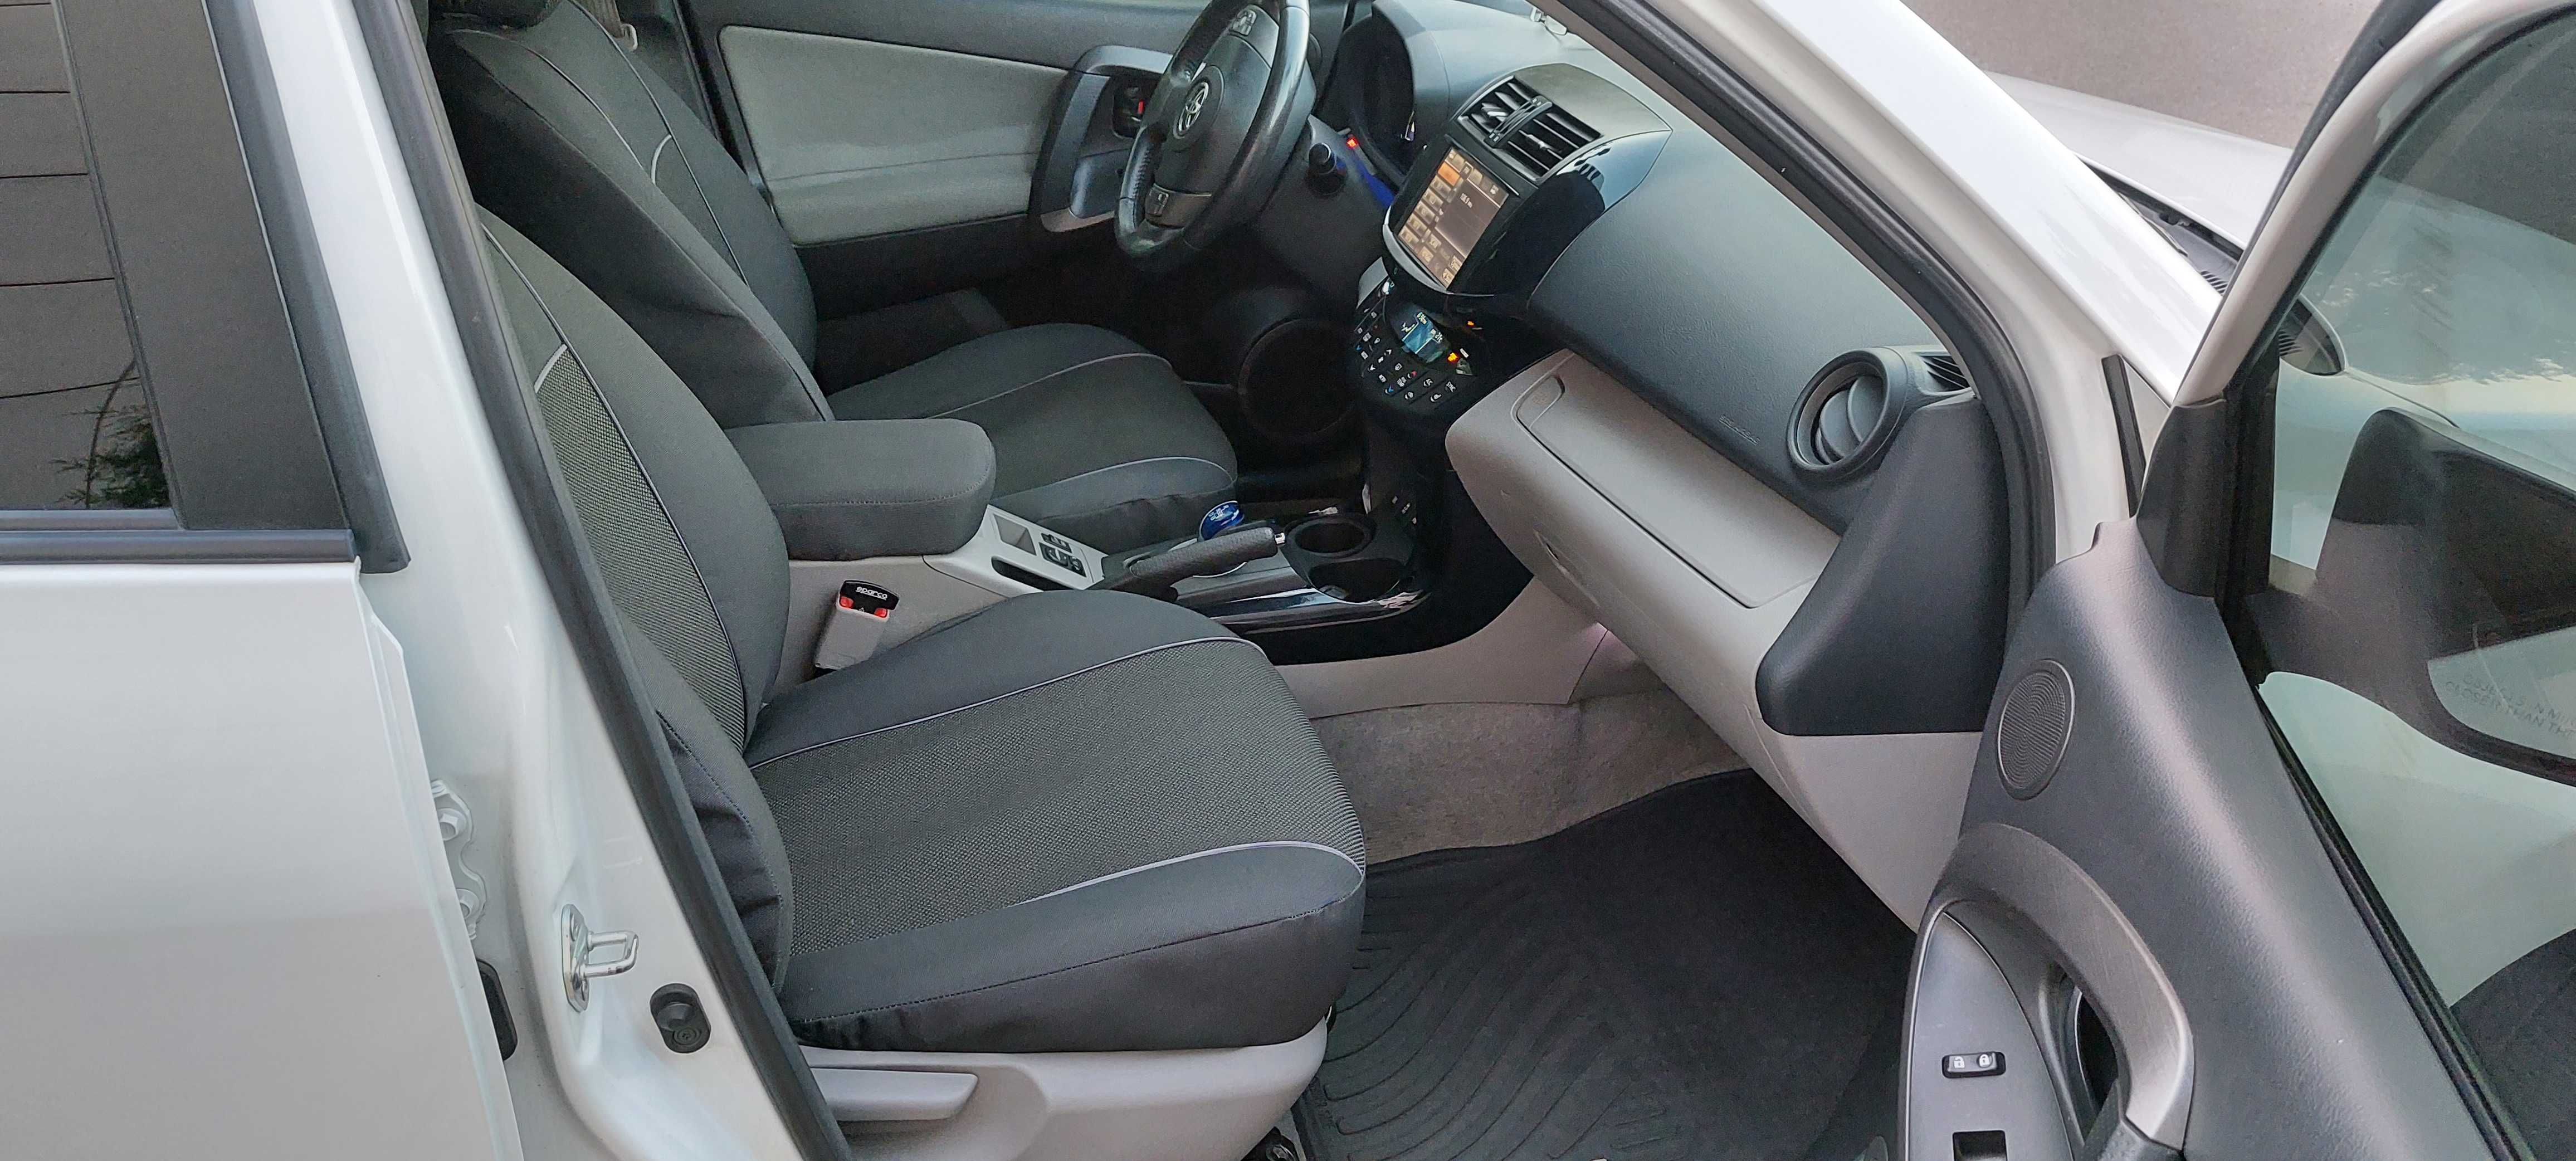 Продам Toyota RAV4 EV 2014